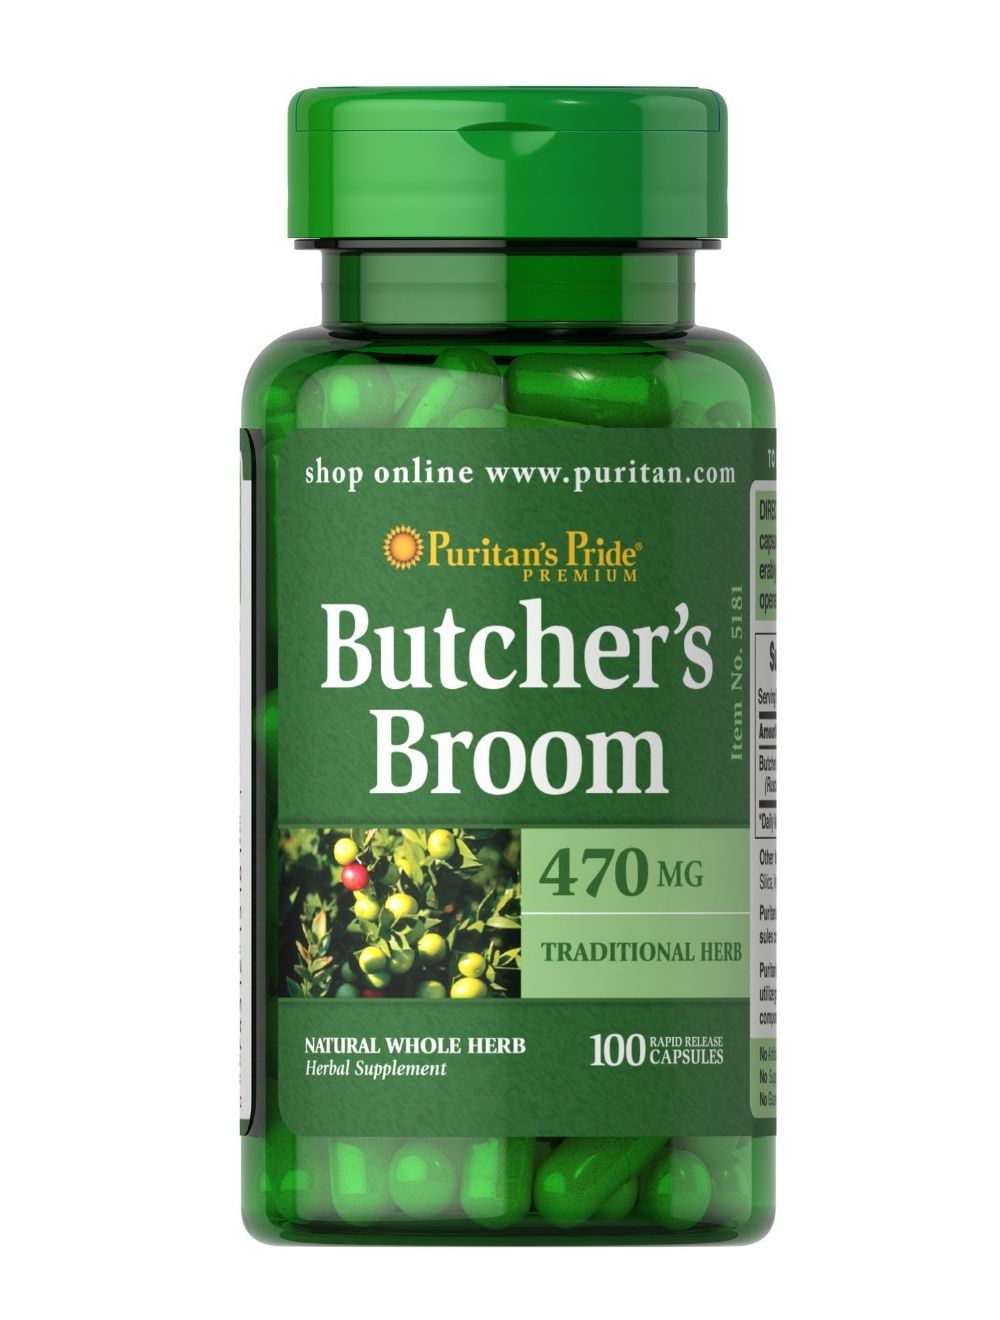 Puritan's Pride Butcher's Broom 470 mg 100 Capsules 5181